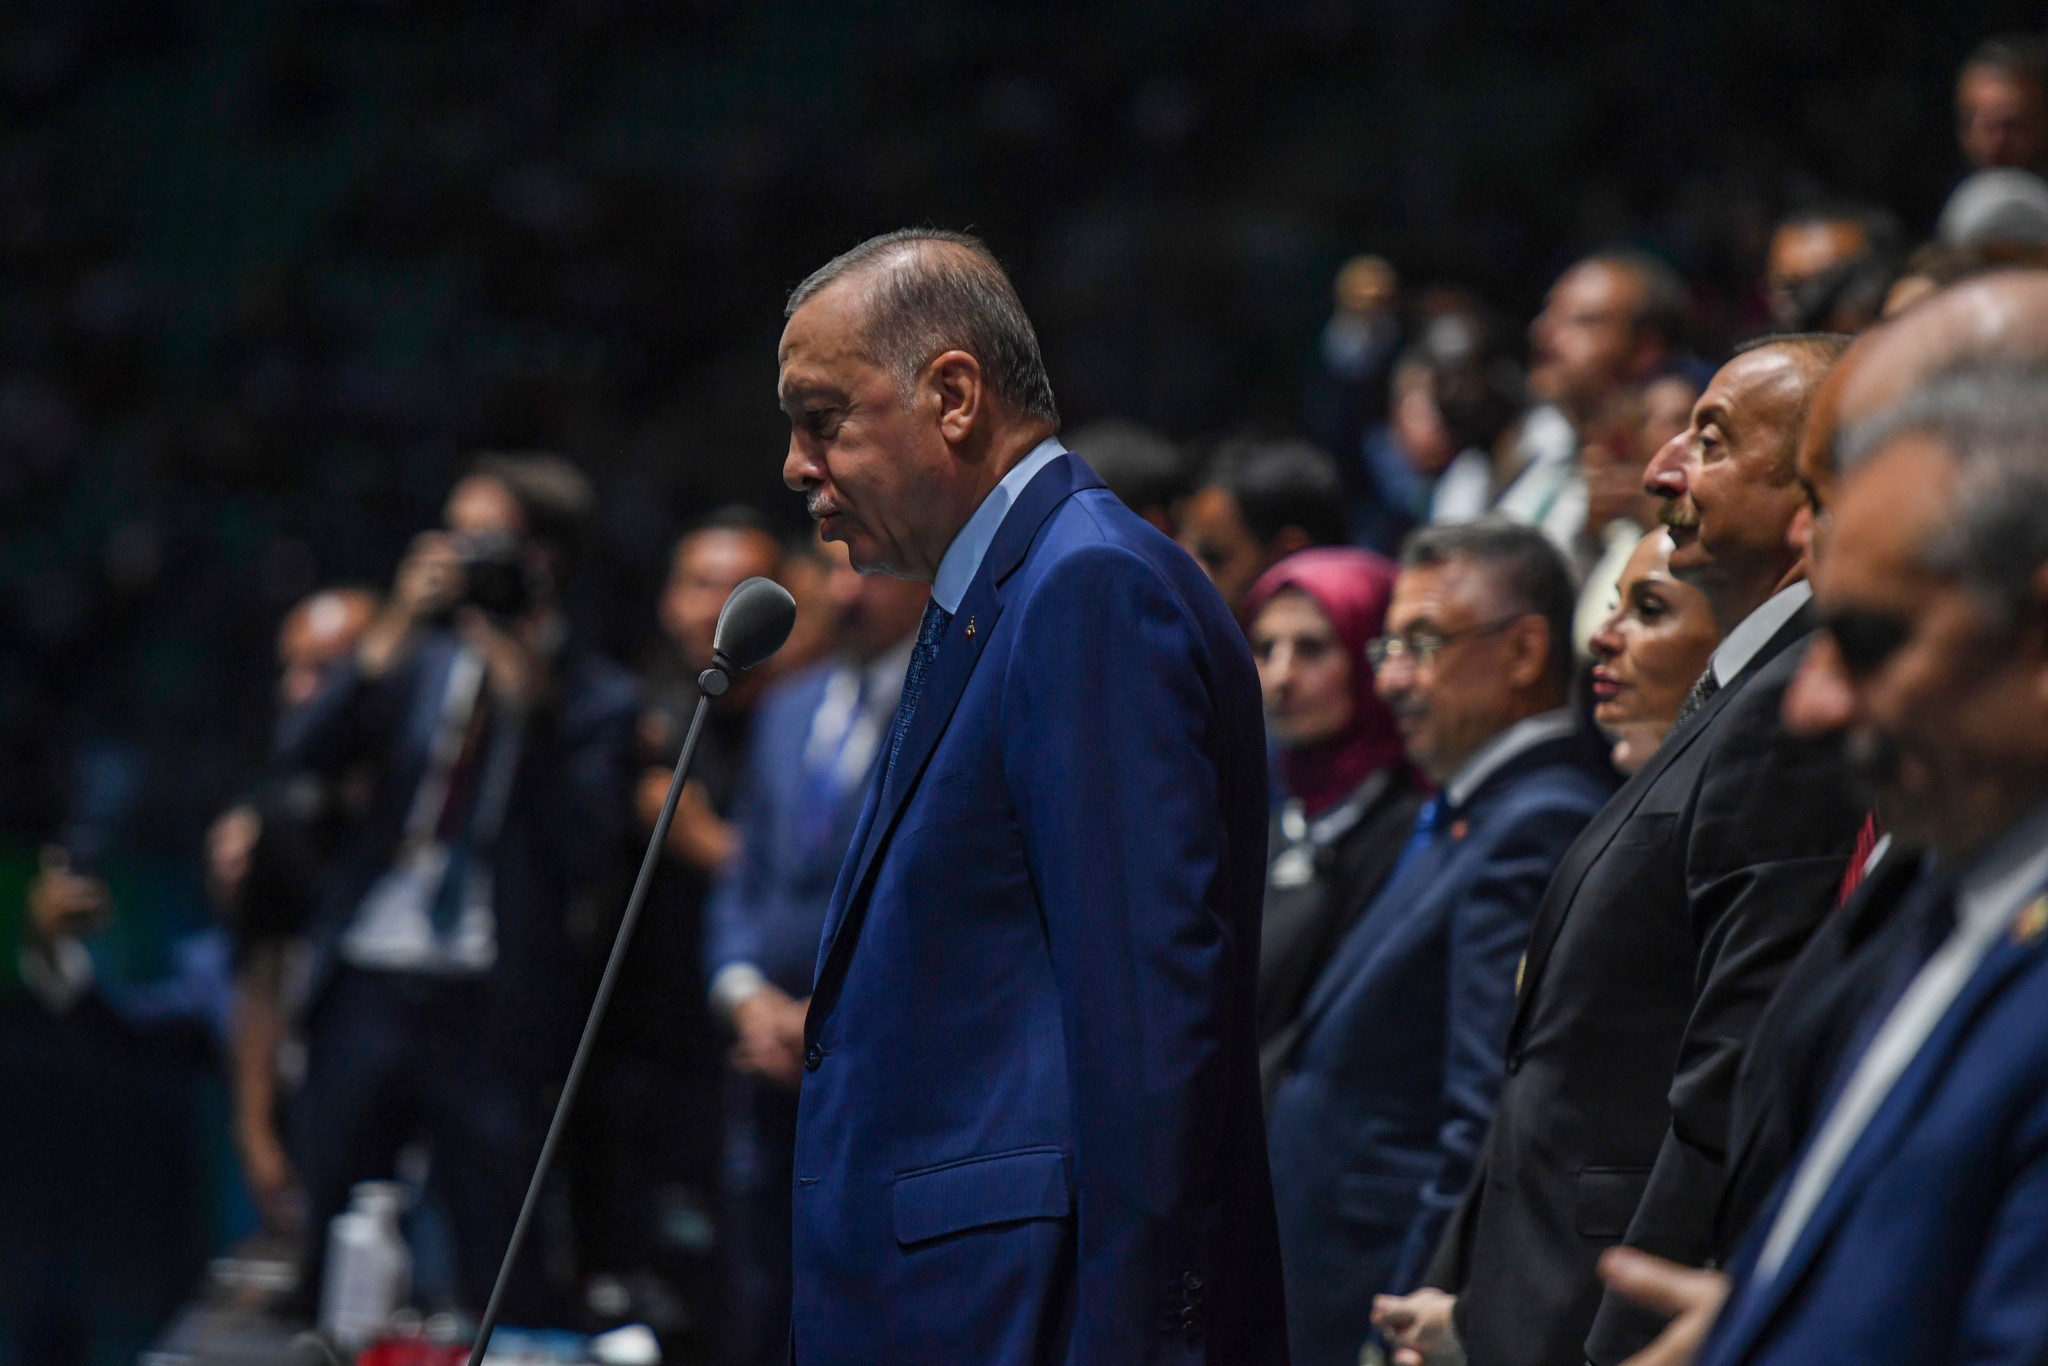 Turkish President Recep Tayyip Erdoğan spoke at the end of the Opening Ceremony ©Konya 2021